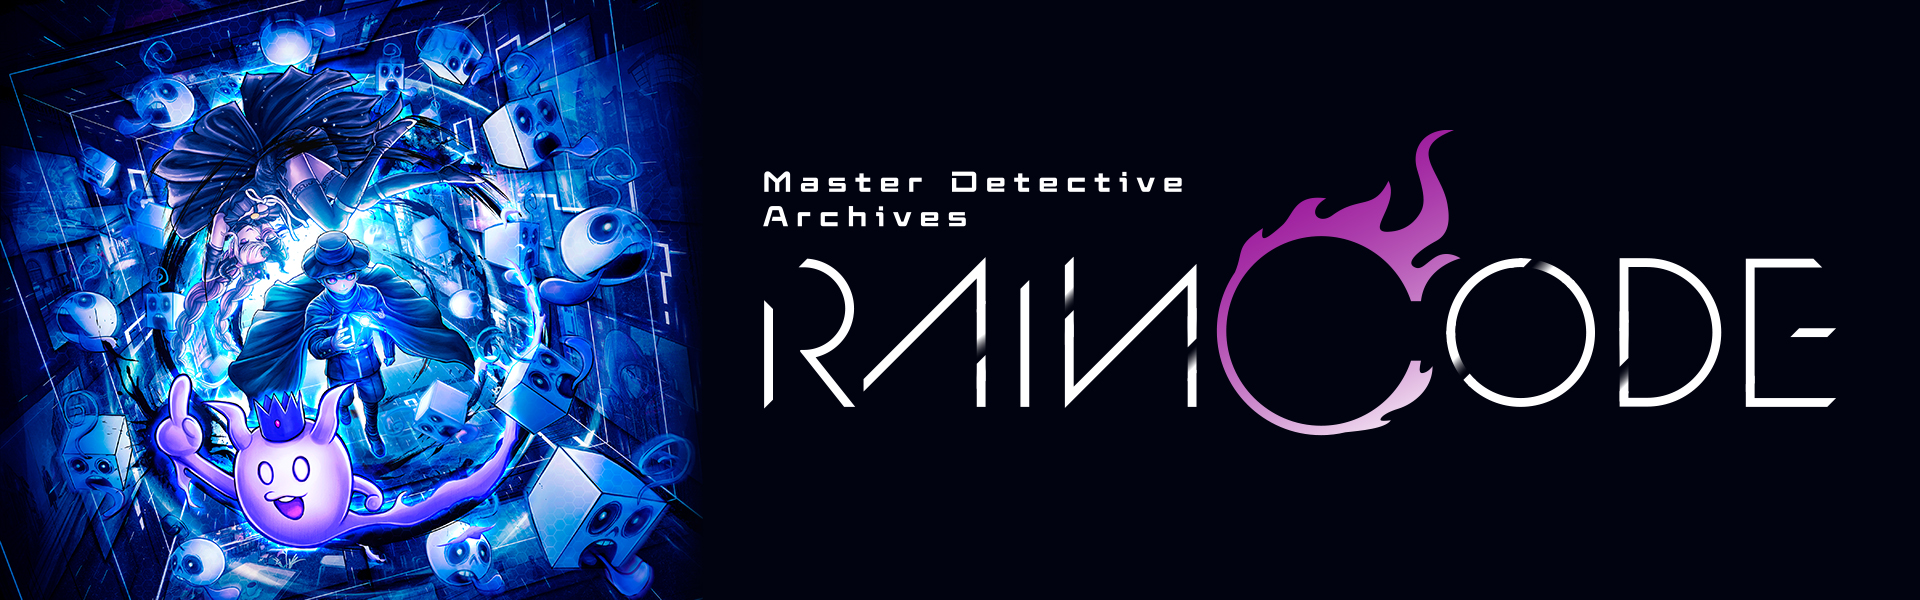 Master Detective Archives: RAIN CODE